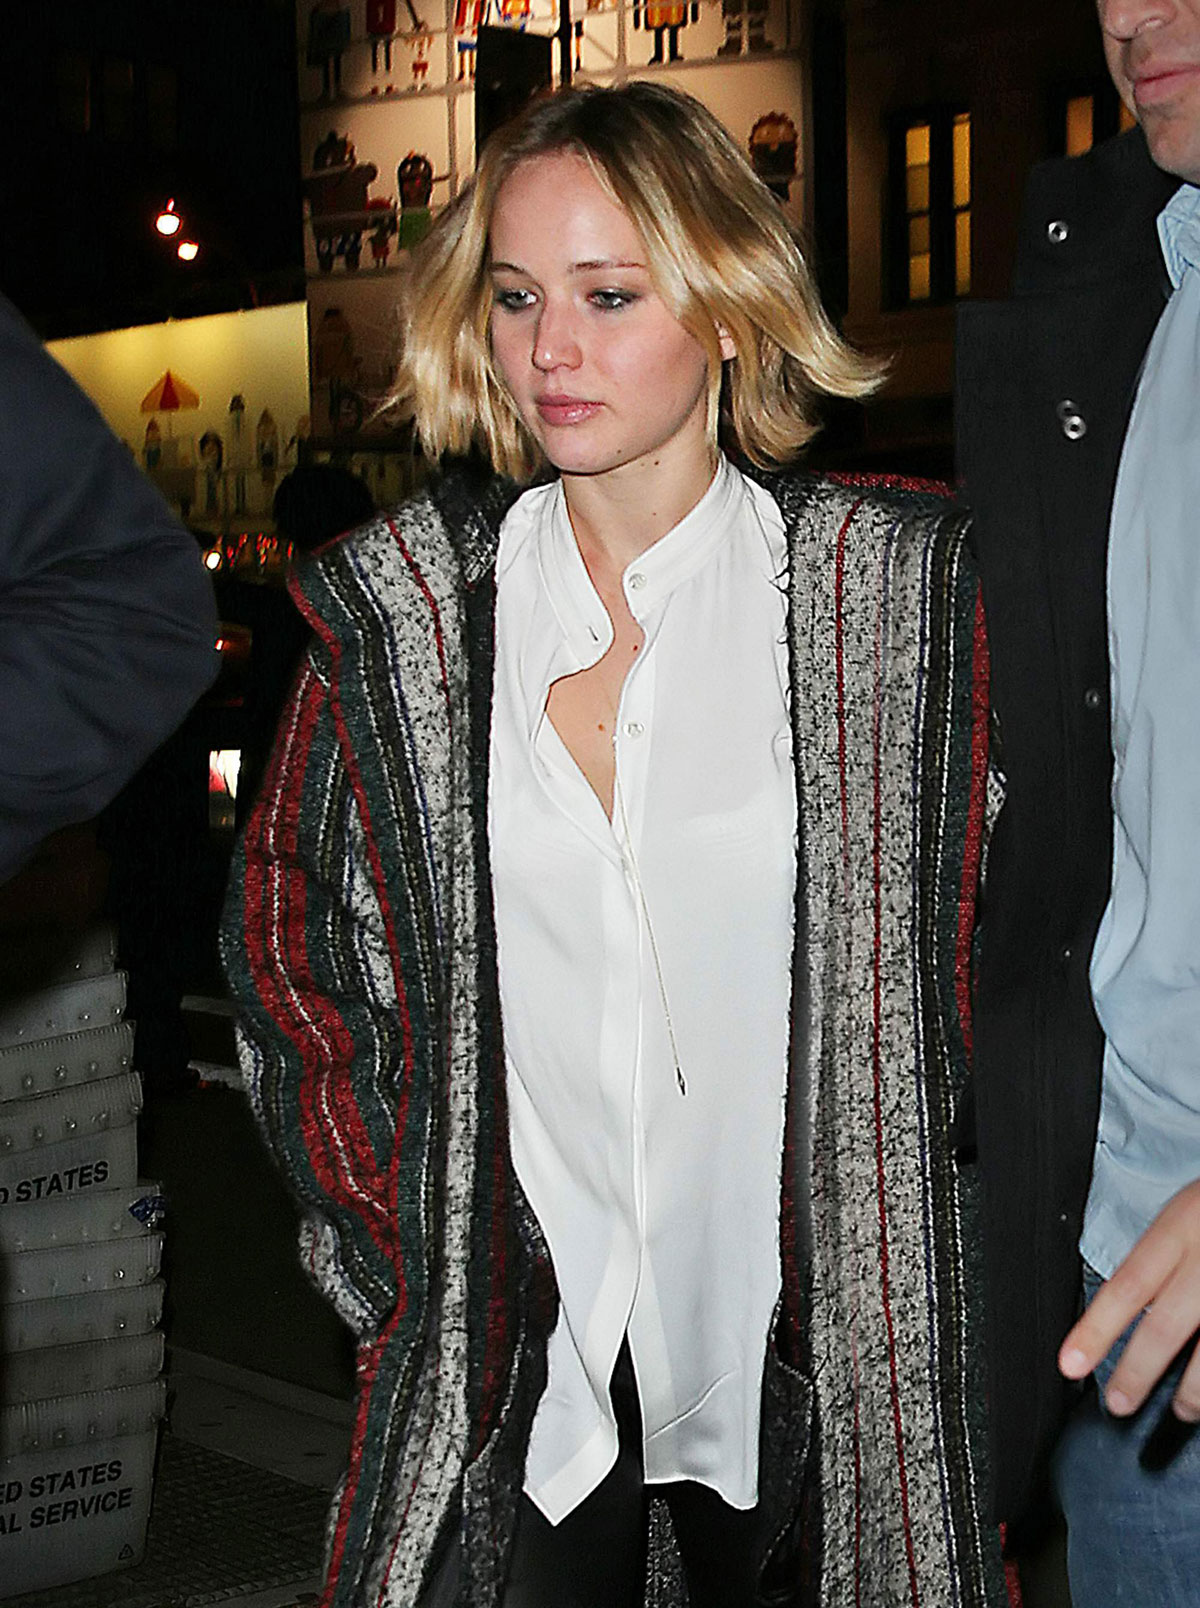 Jennifer Lawrence is seen spotted leaving Restaurant